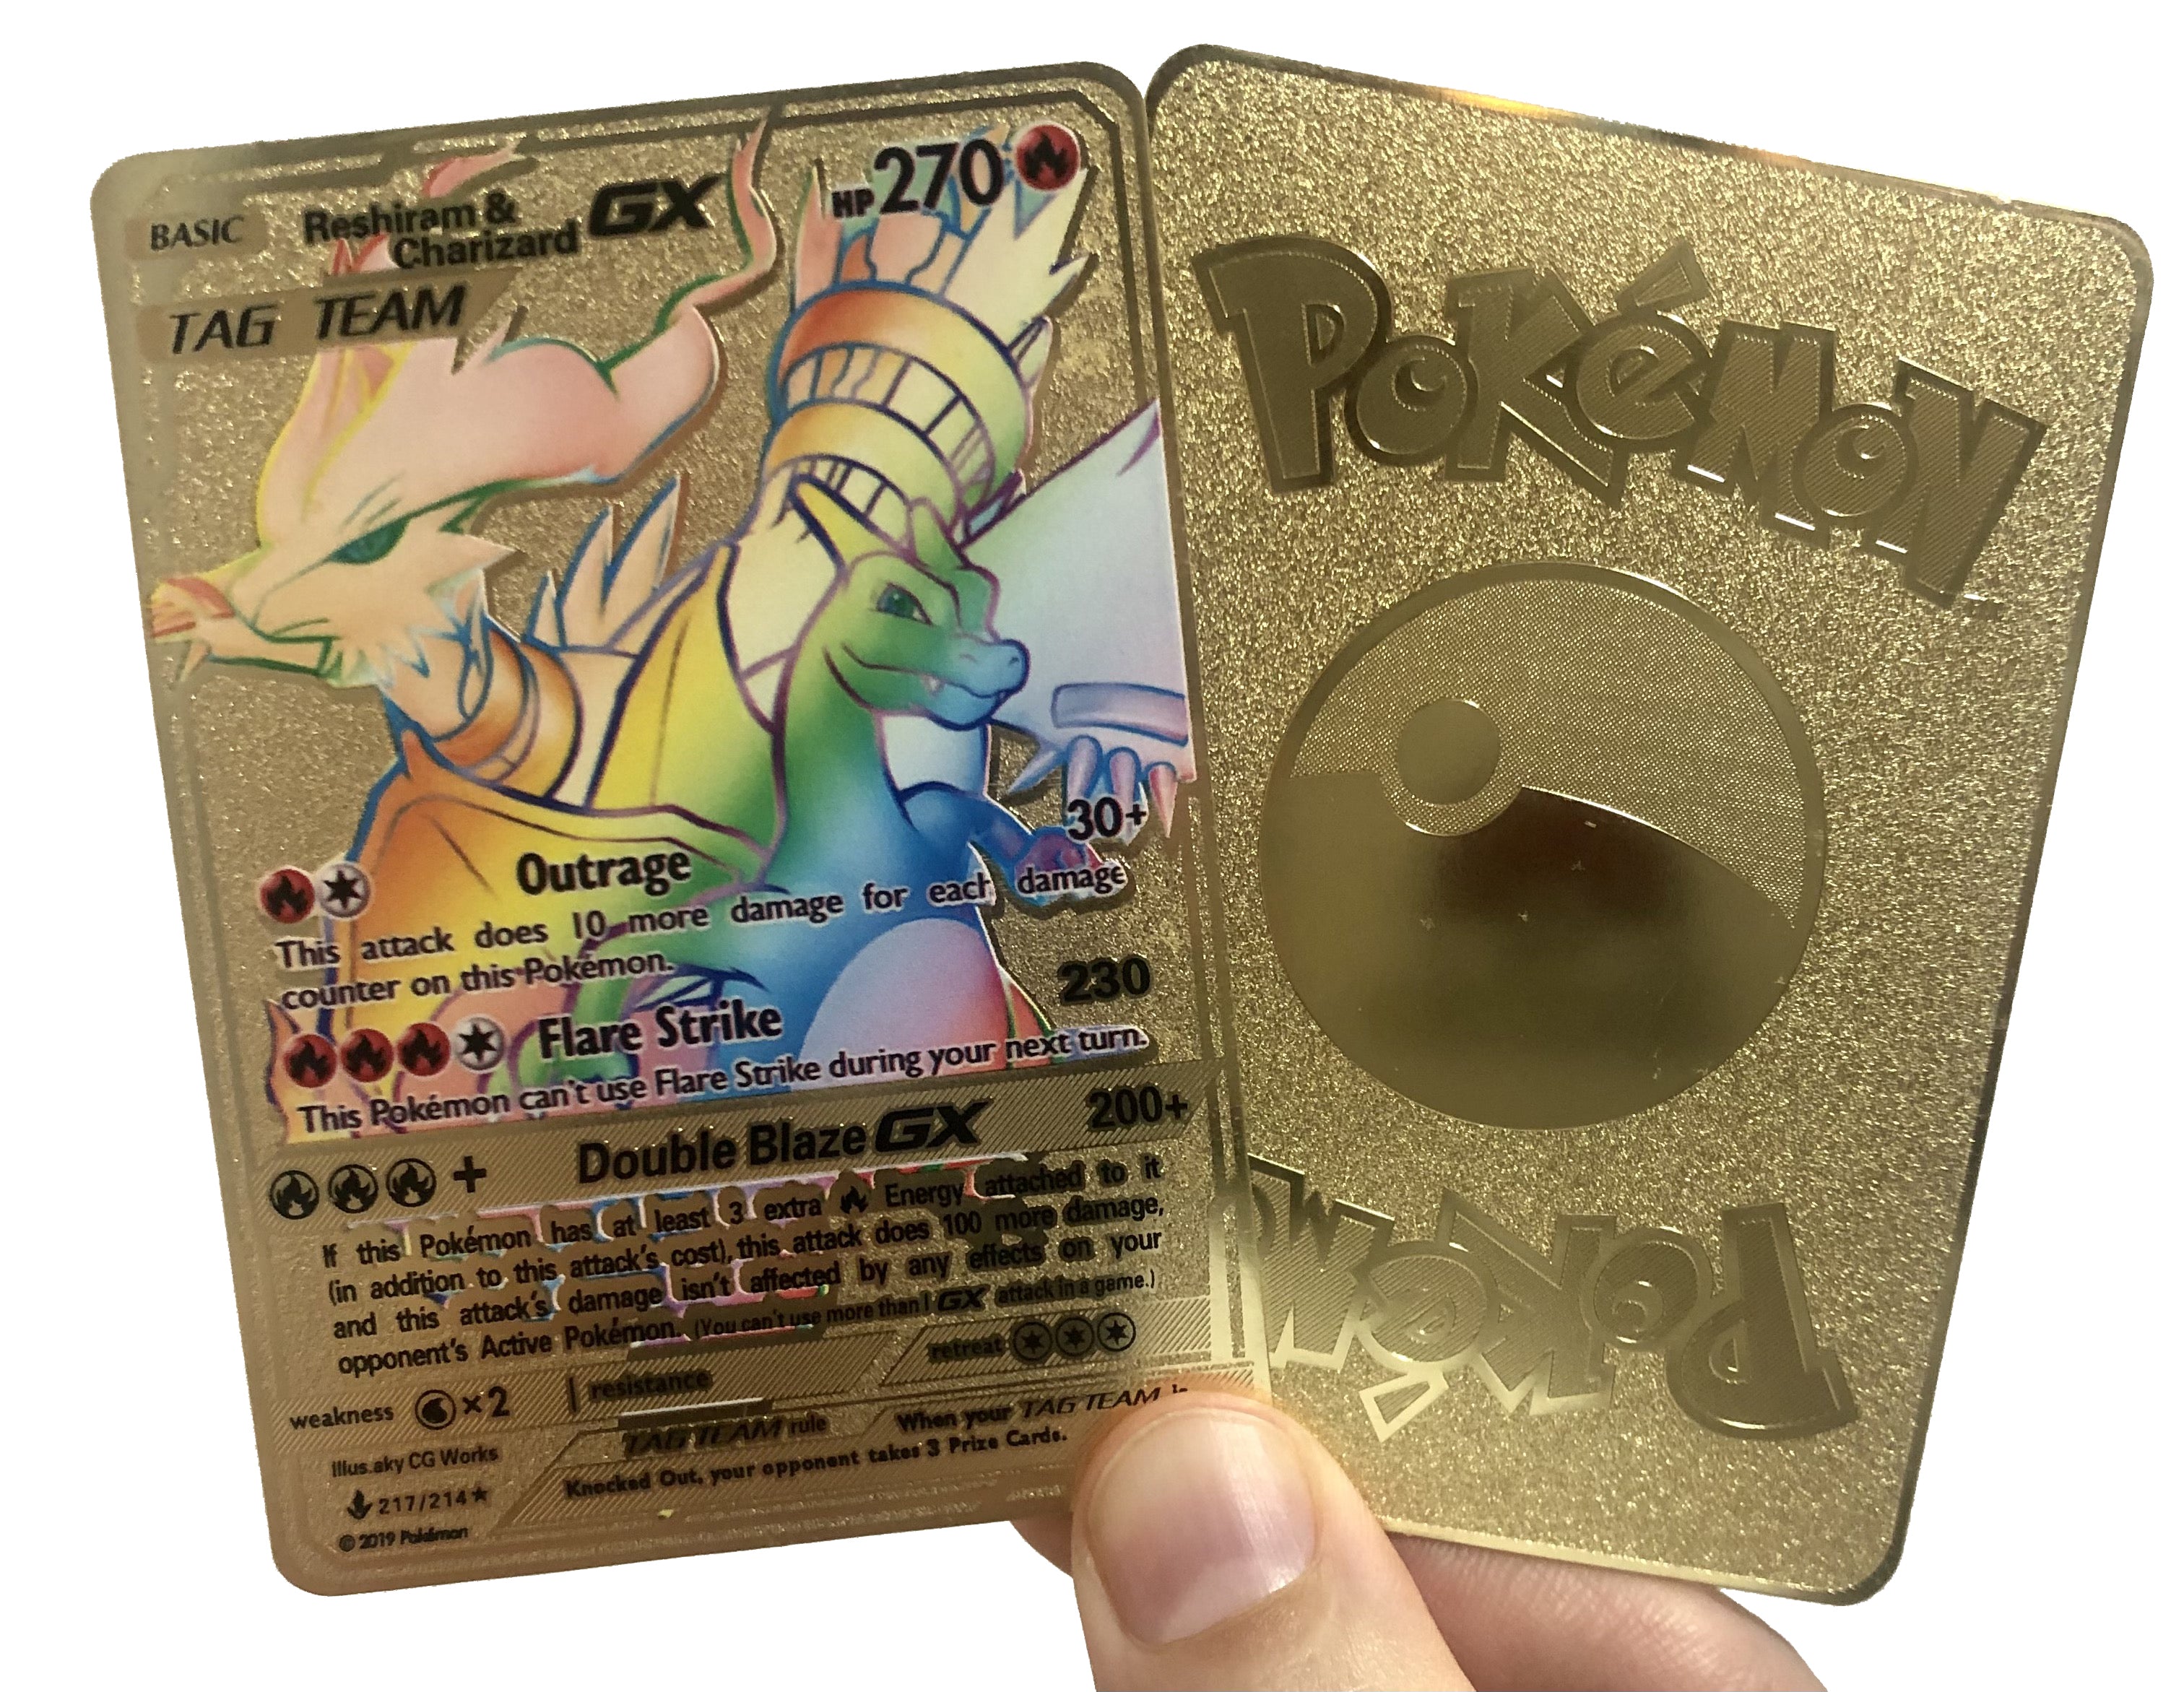 Reshiram & Charizard GX TAG TEAM - 217/214 - Rare Rainbow Card